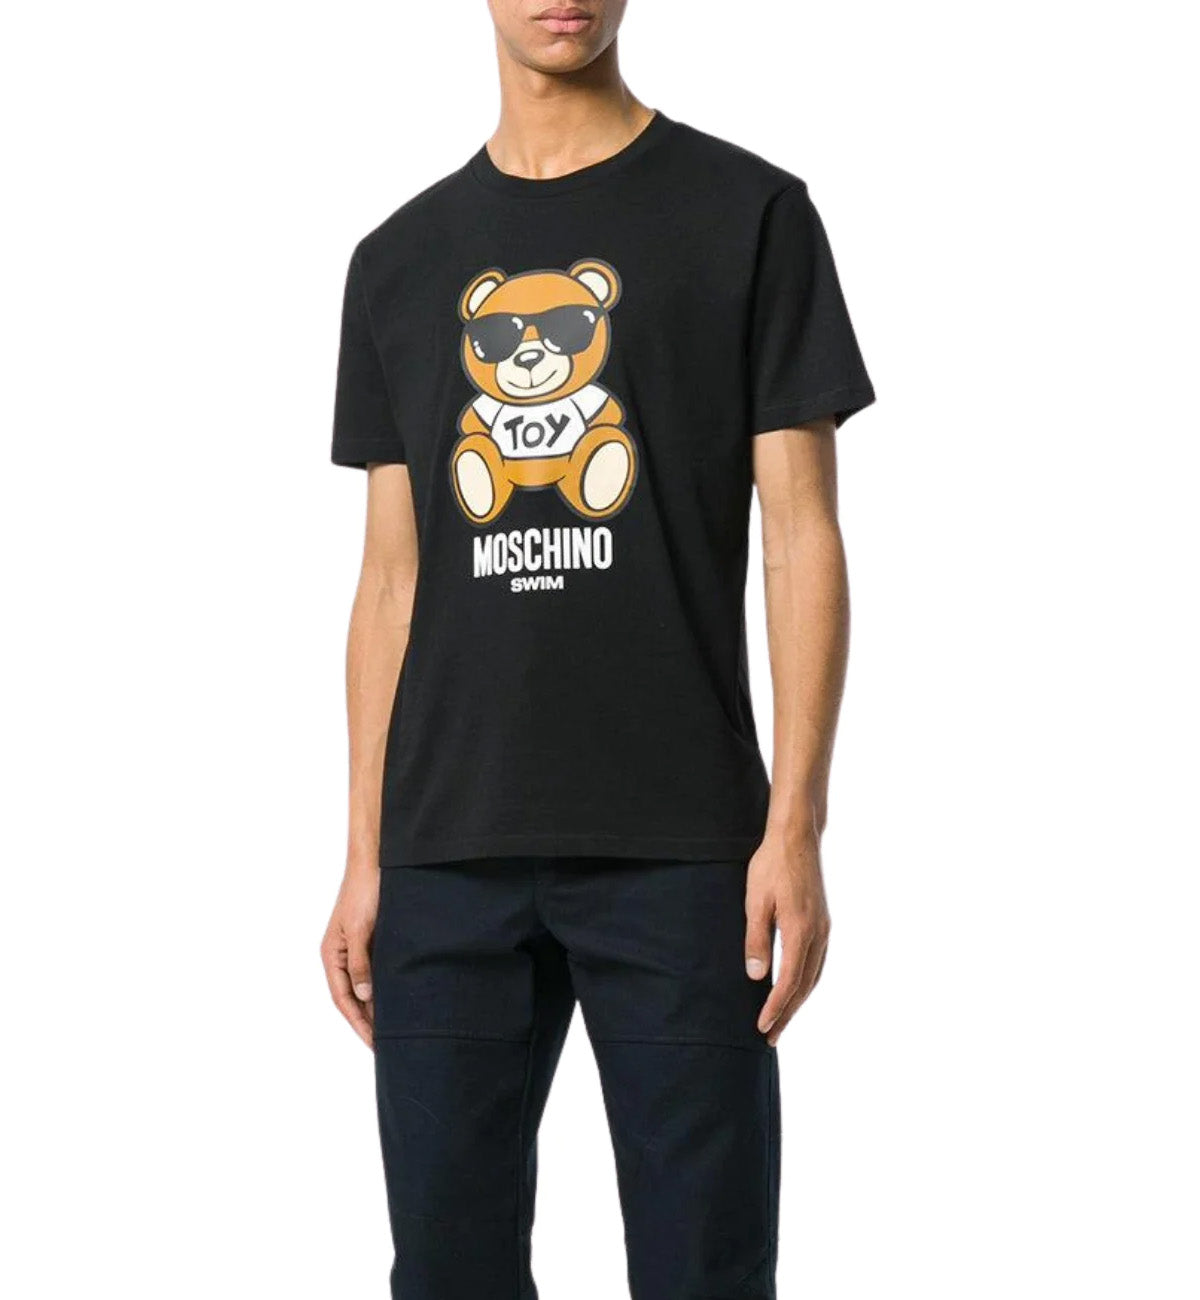 Moschino Swim Toy Bear T-Shirt (Black)